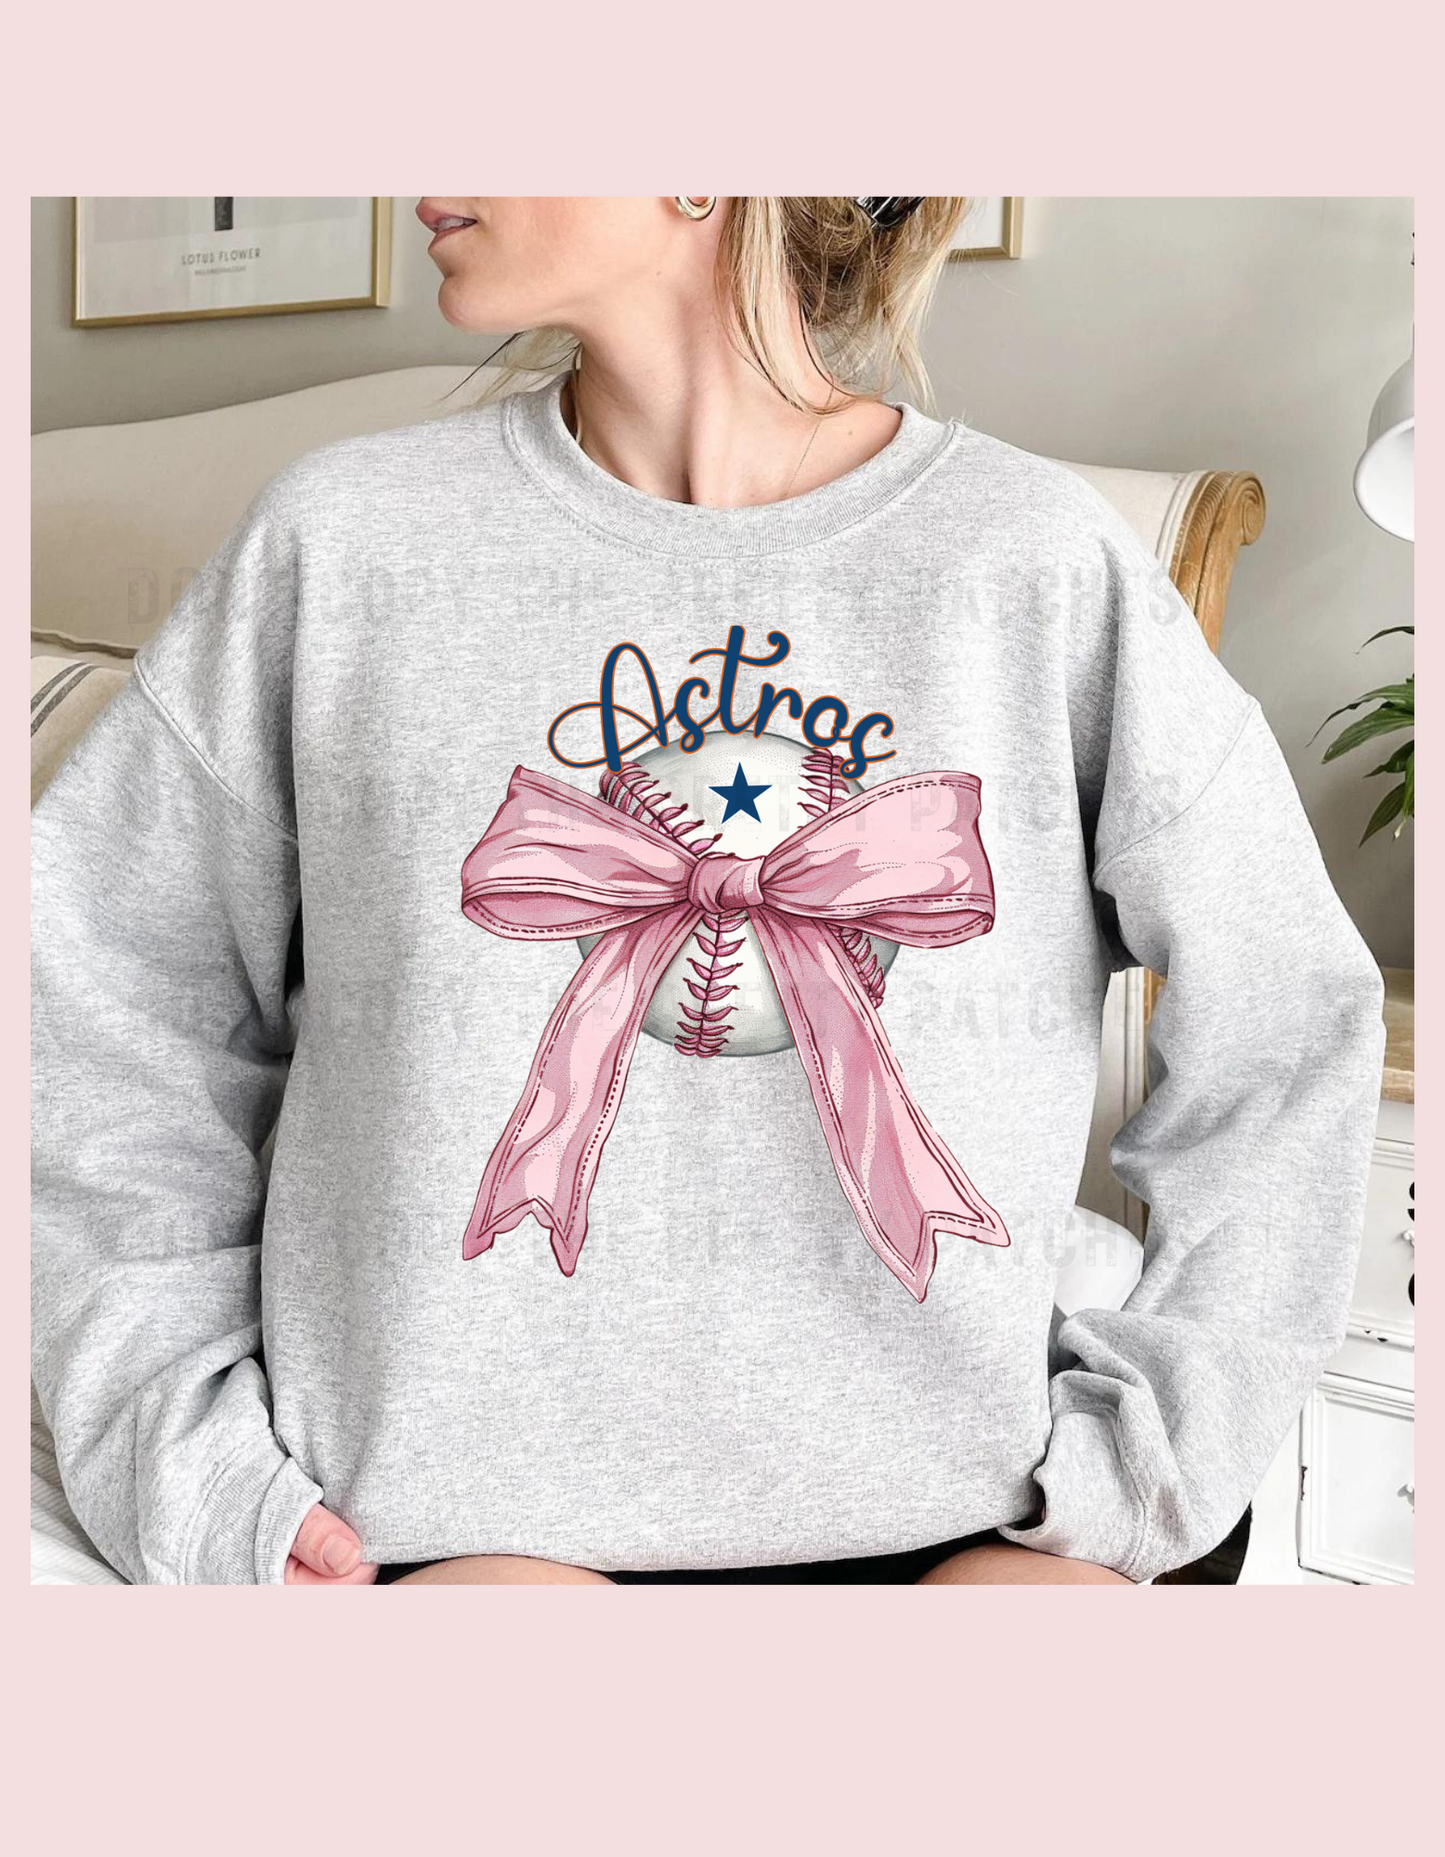 Girly astros sweatshirt ADULT SIZES